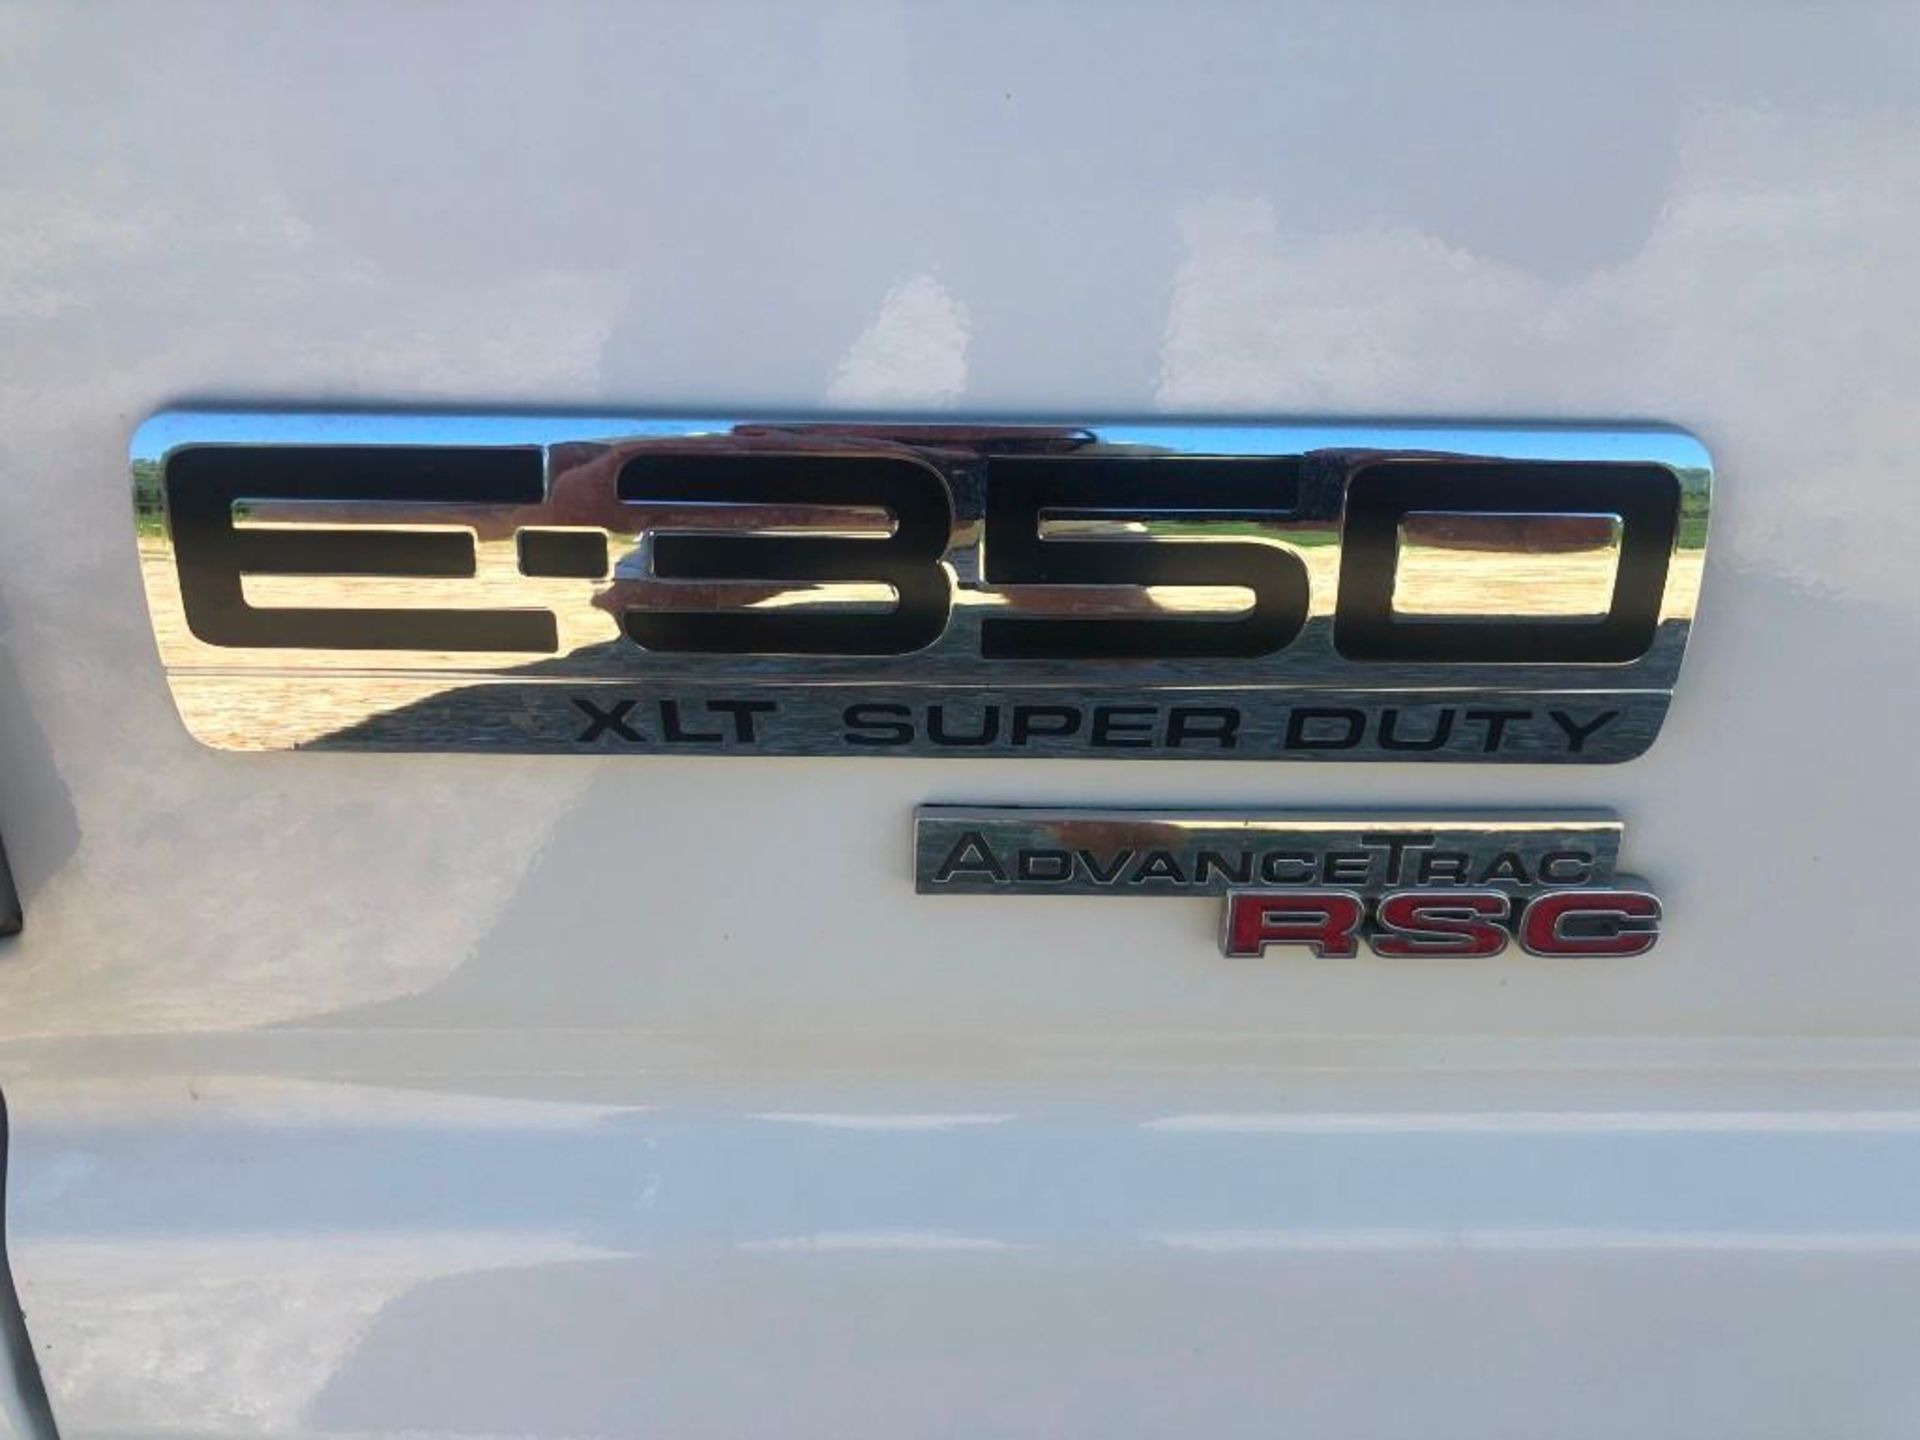 2014 Ford E3500 XLT Super Duty Van, VIN #1FBSS3BL2EDA76982, 182268 Miles, Catalytic Converter has - Image 5 of 20